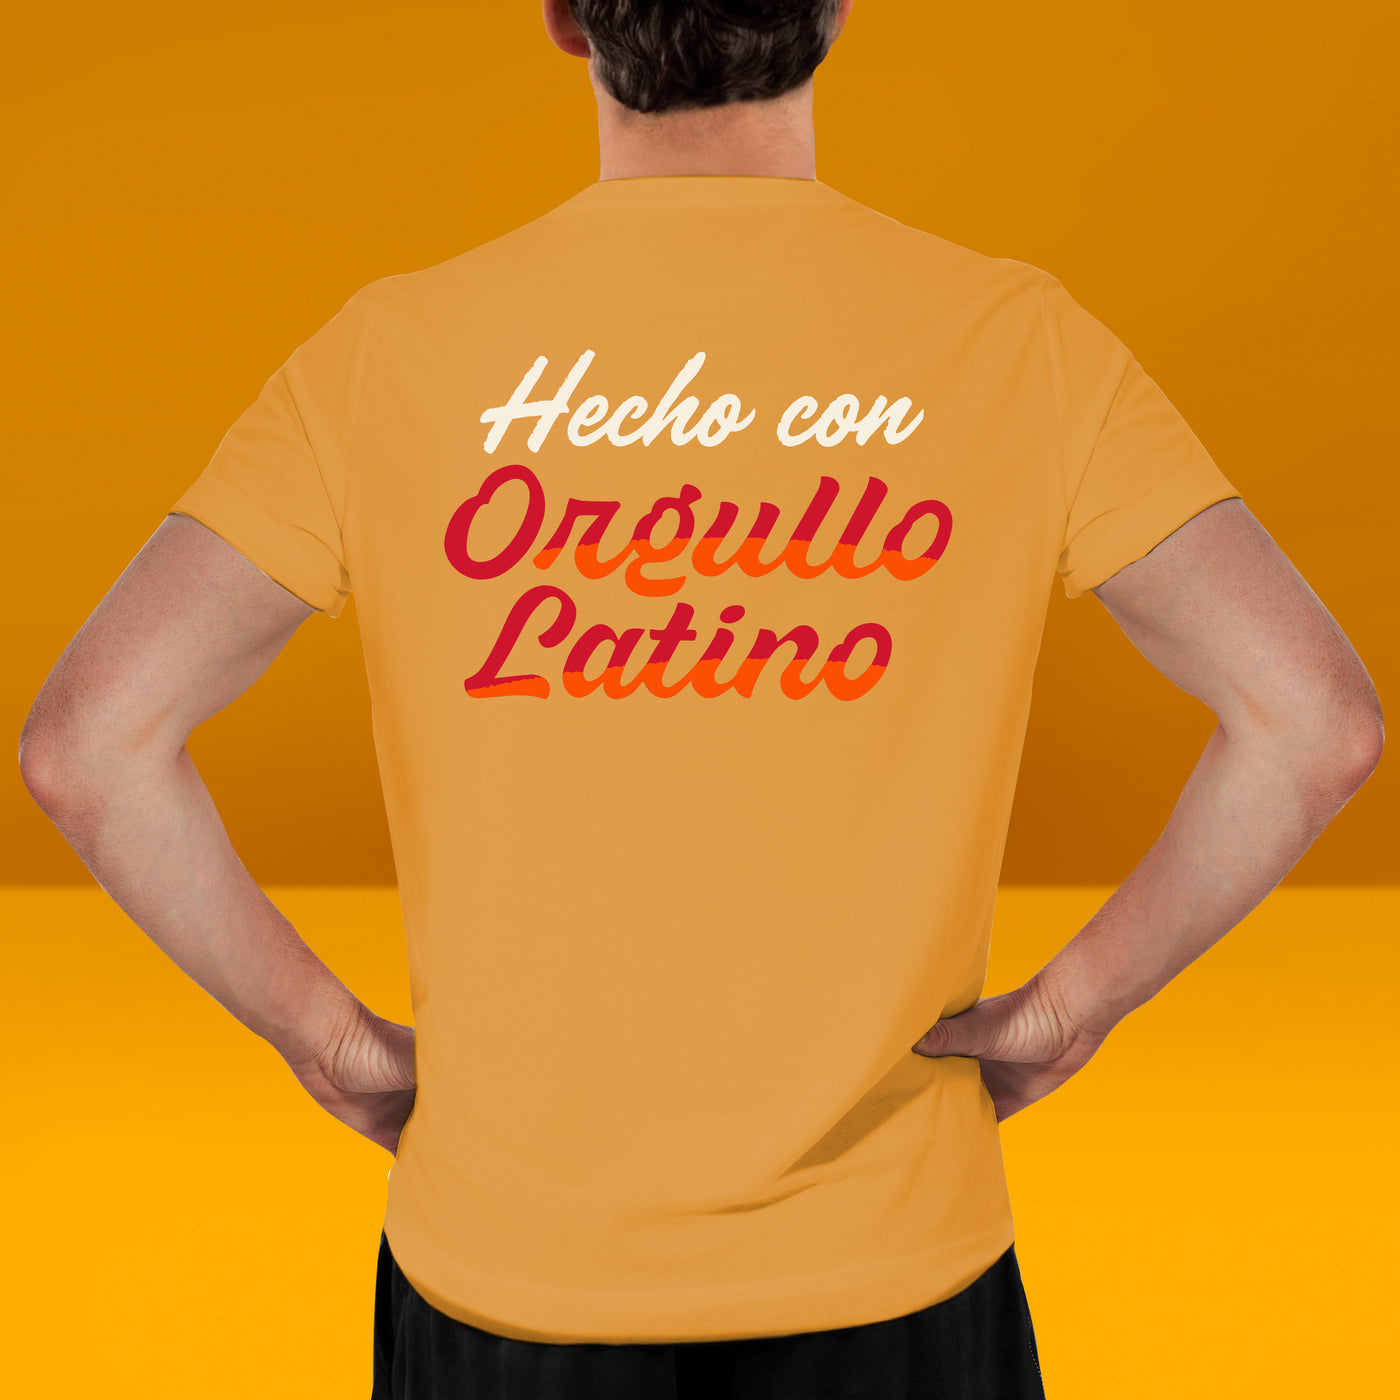 Camiseta Hecho con Orgullo Latino ¡Nueva!